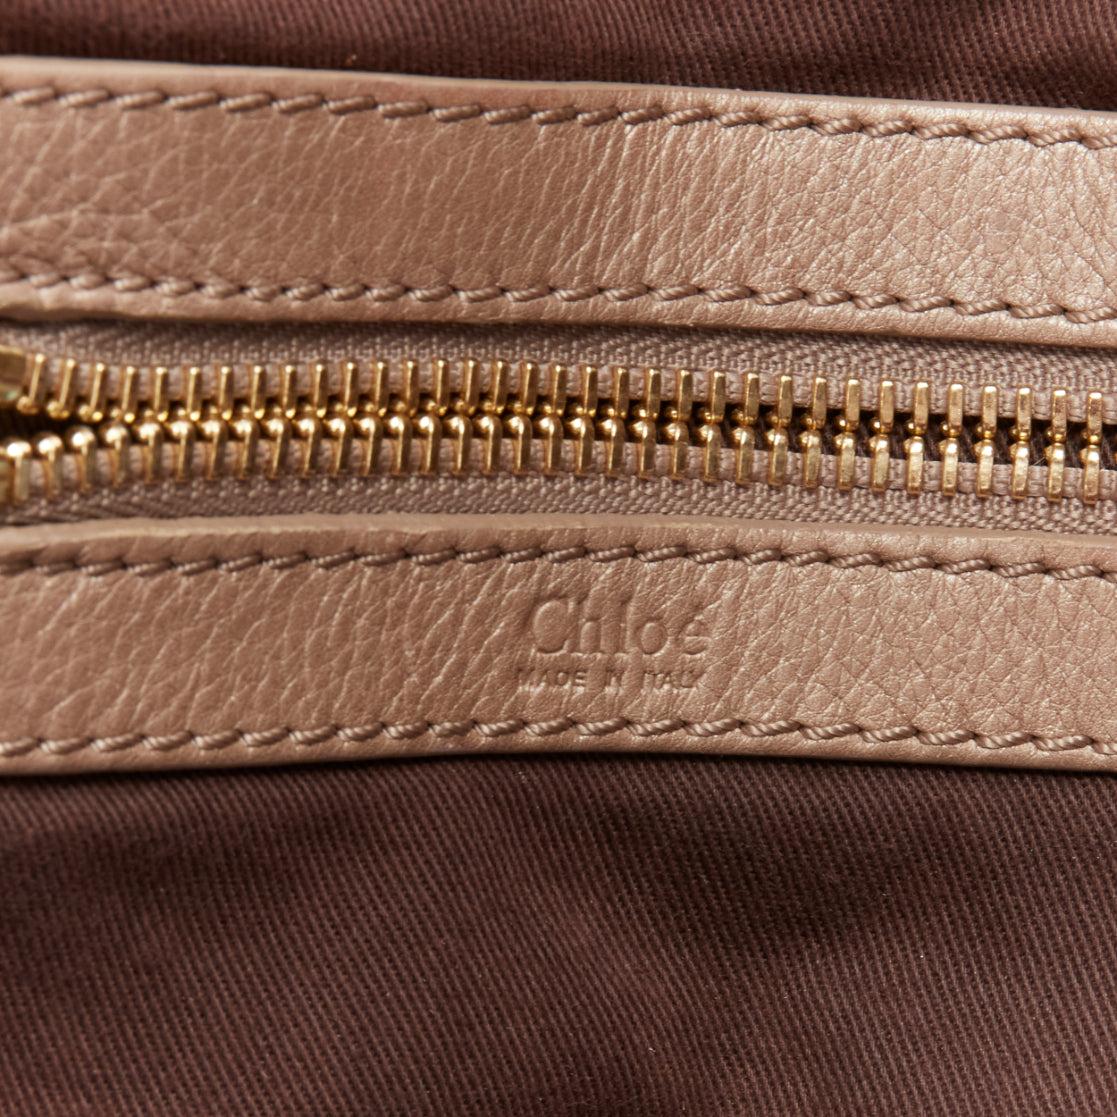 CHLOE dark brown soft leather oversized zipper pull pipe trim tote bag 5